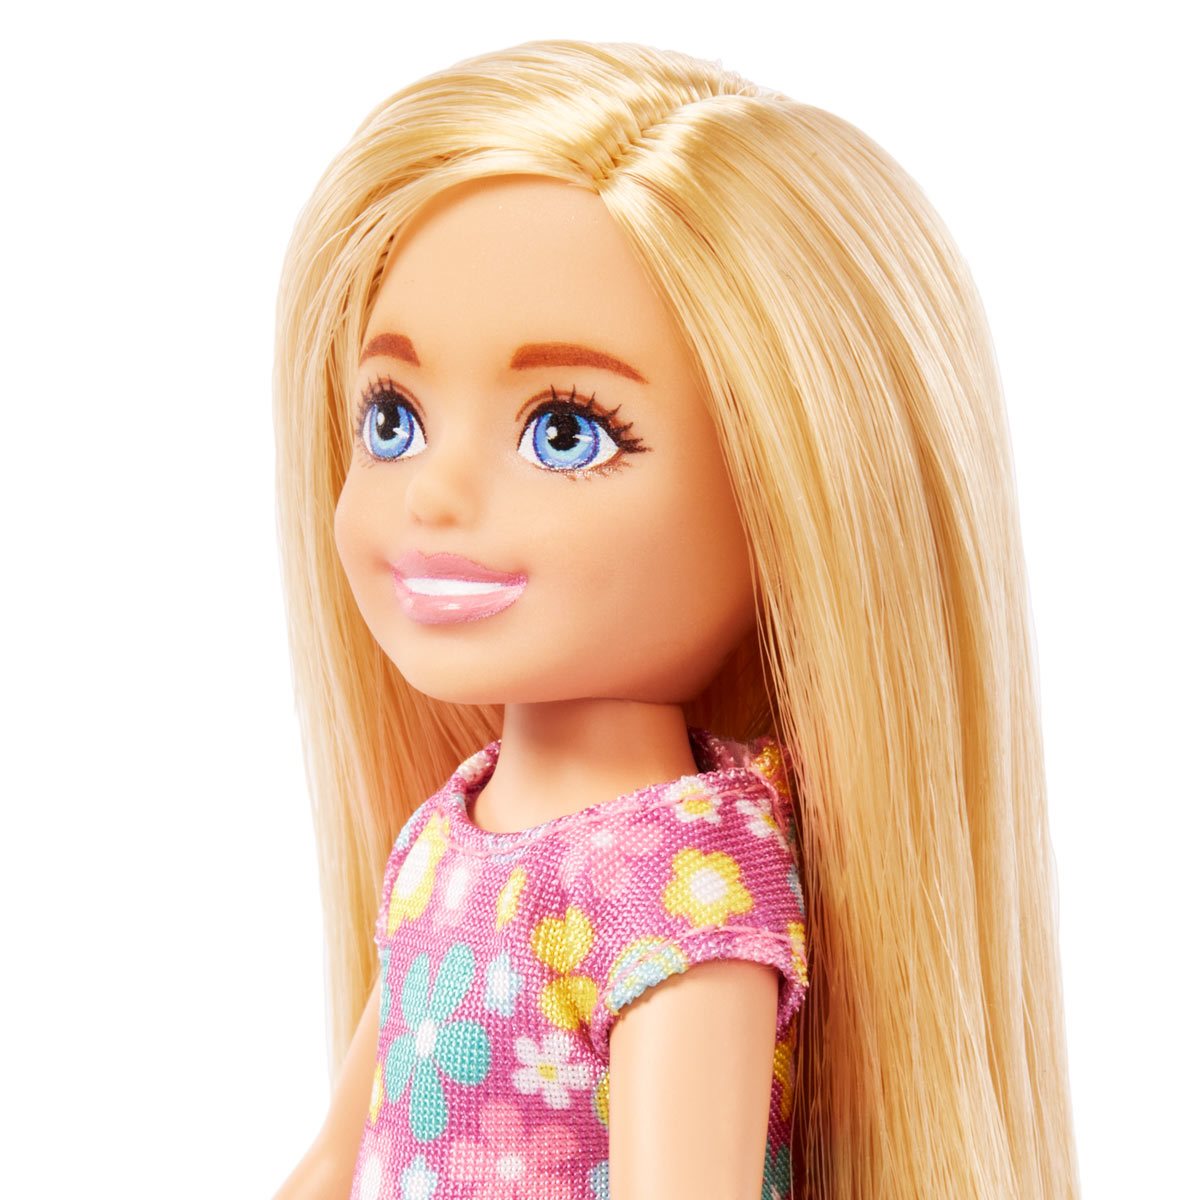 Barbie Chelsea Doll